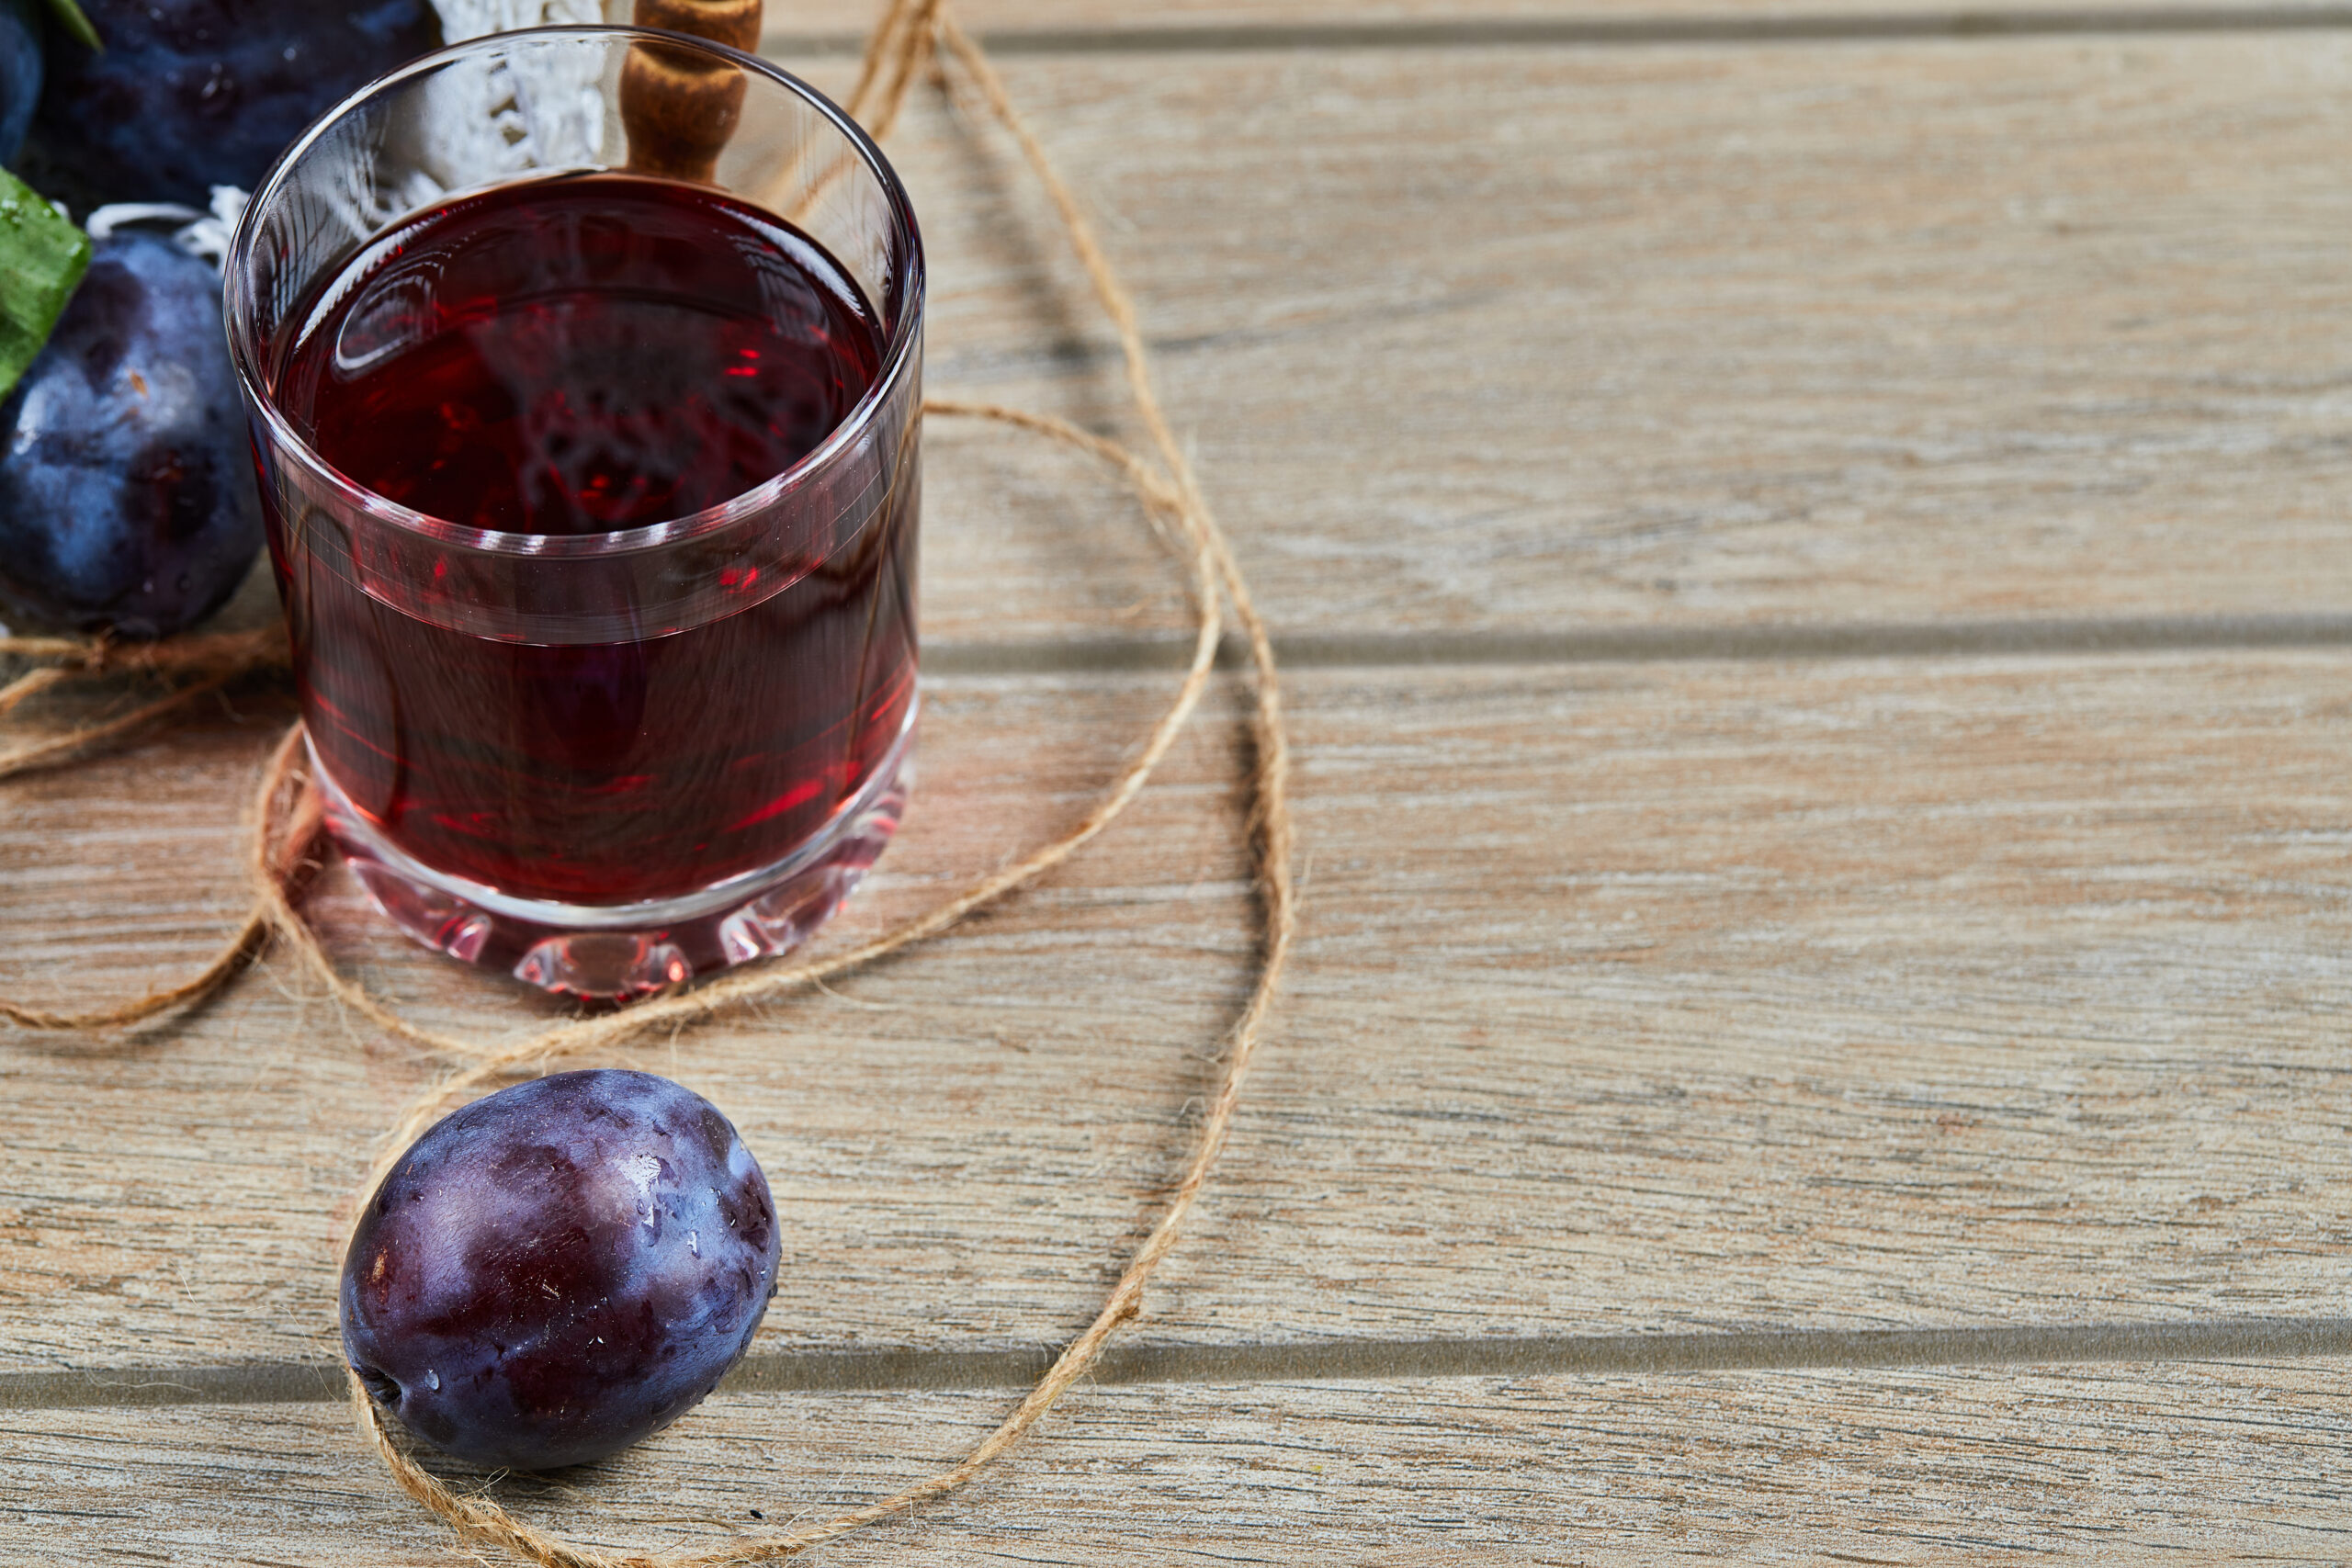 How to make prune juice taste better